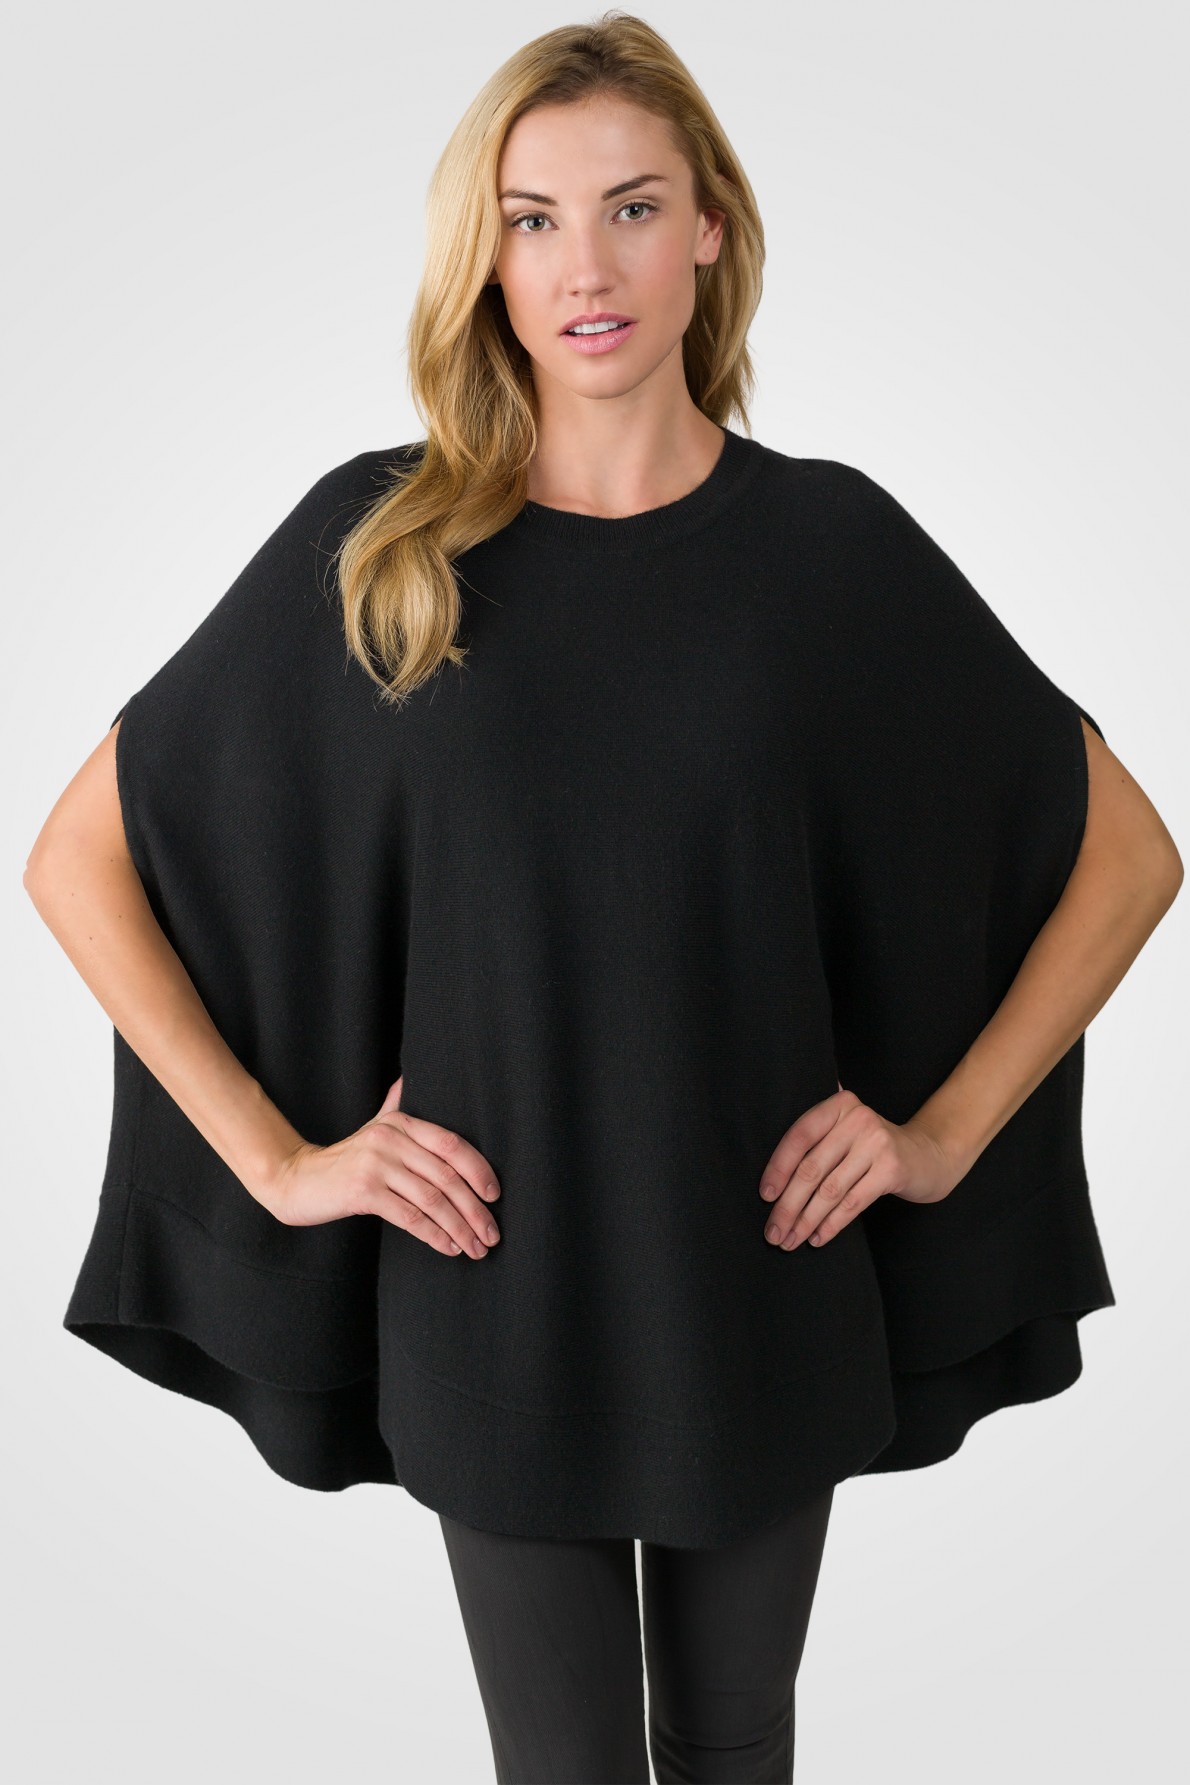 black cashmere oversized laid-back poncho sweater front view alt ikzpdfz